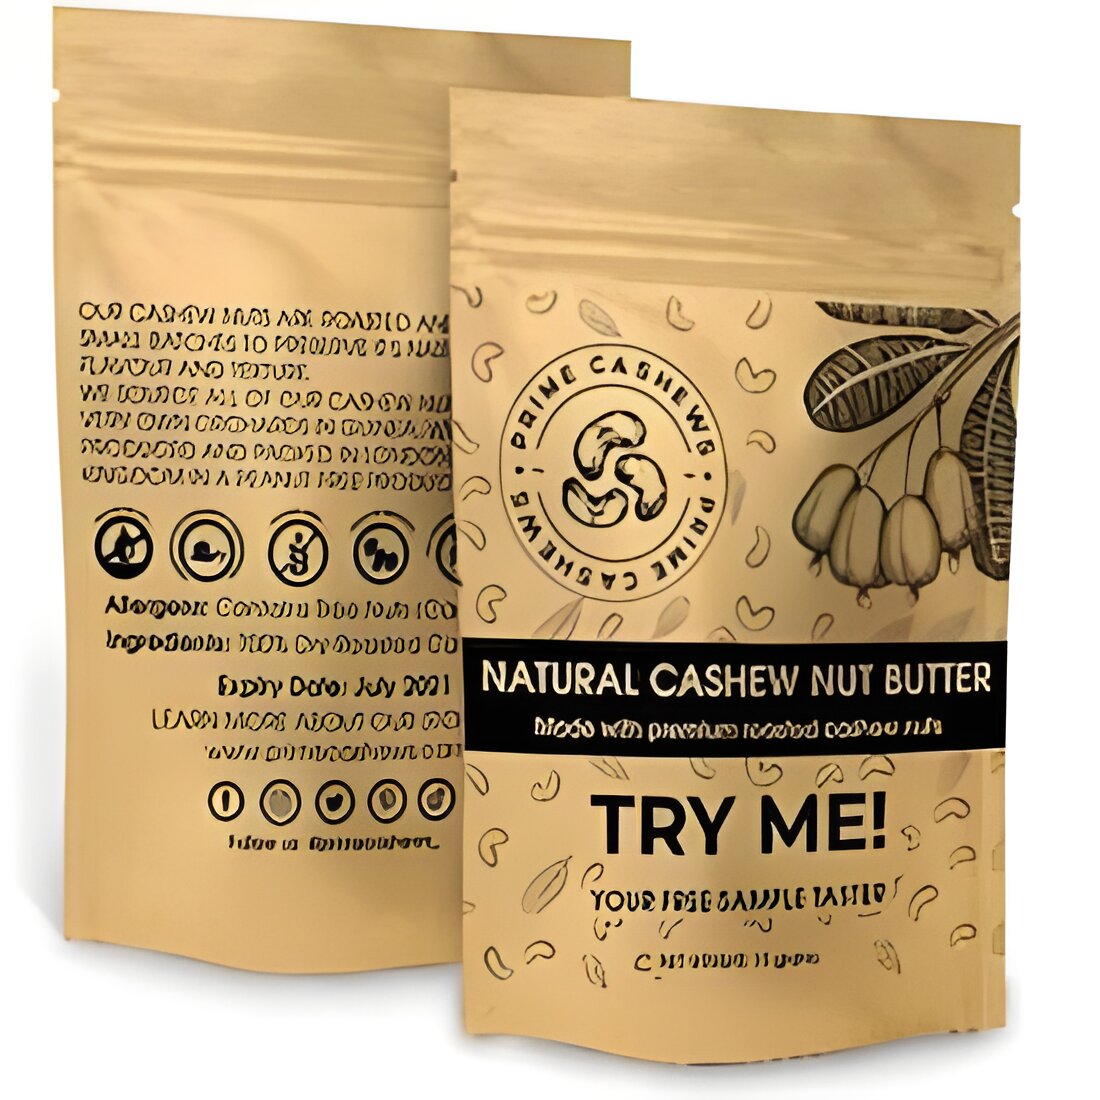 Free Cashew Nut Butter Sample